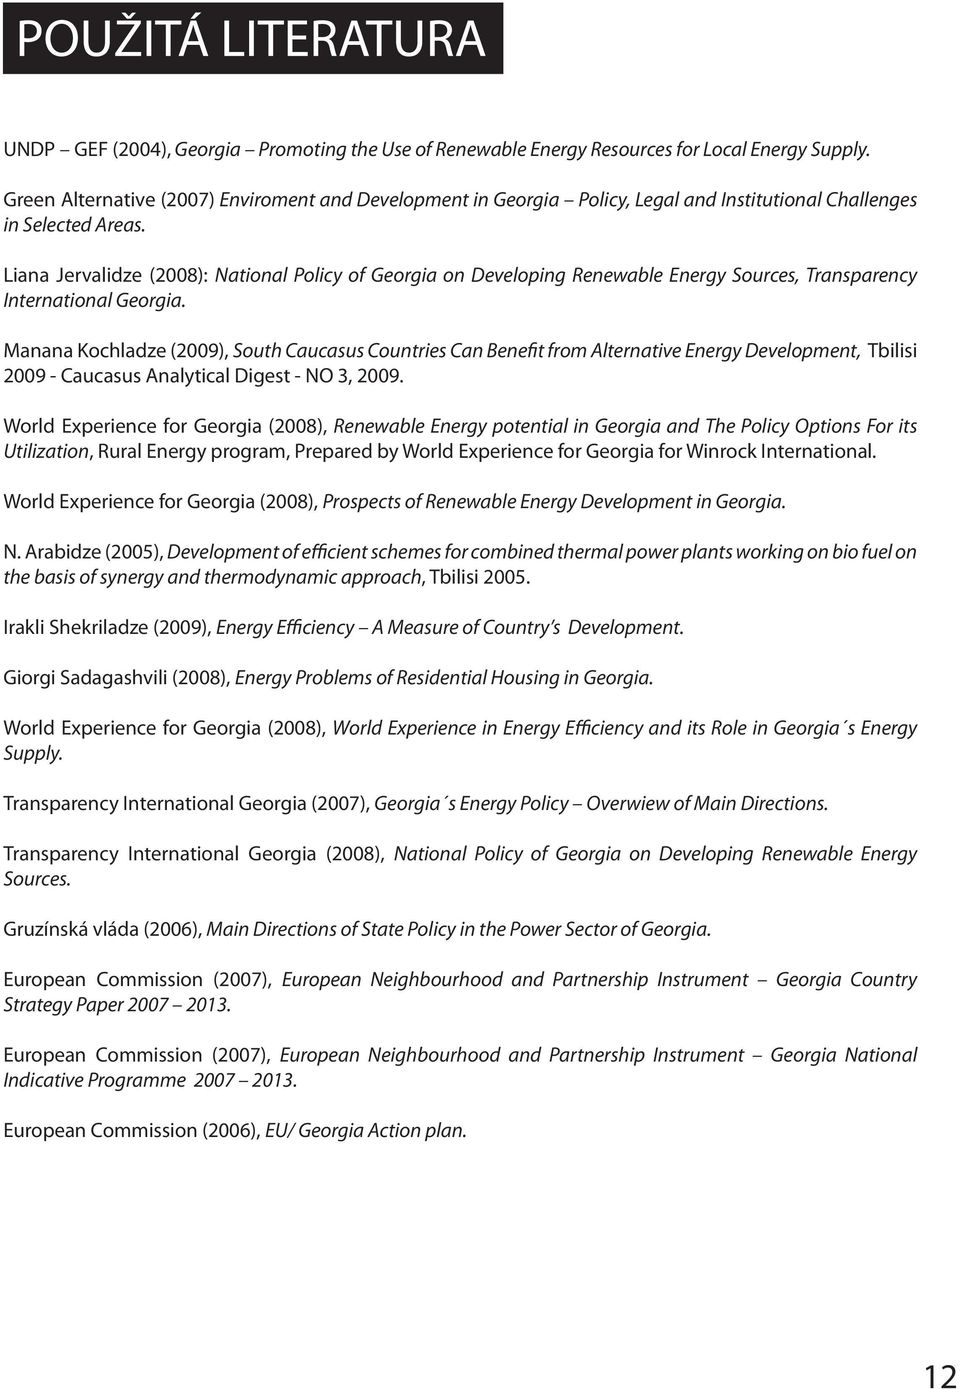 Liana Jervalidze (2008): National Policy of Georgia on Developing Renewable Energy Sources, Transparency International Georgia.